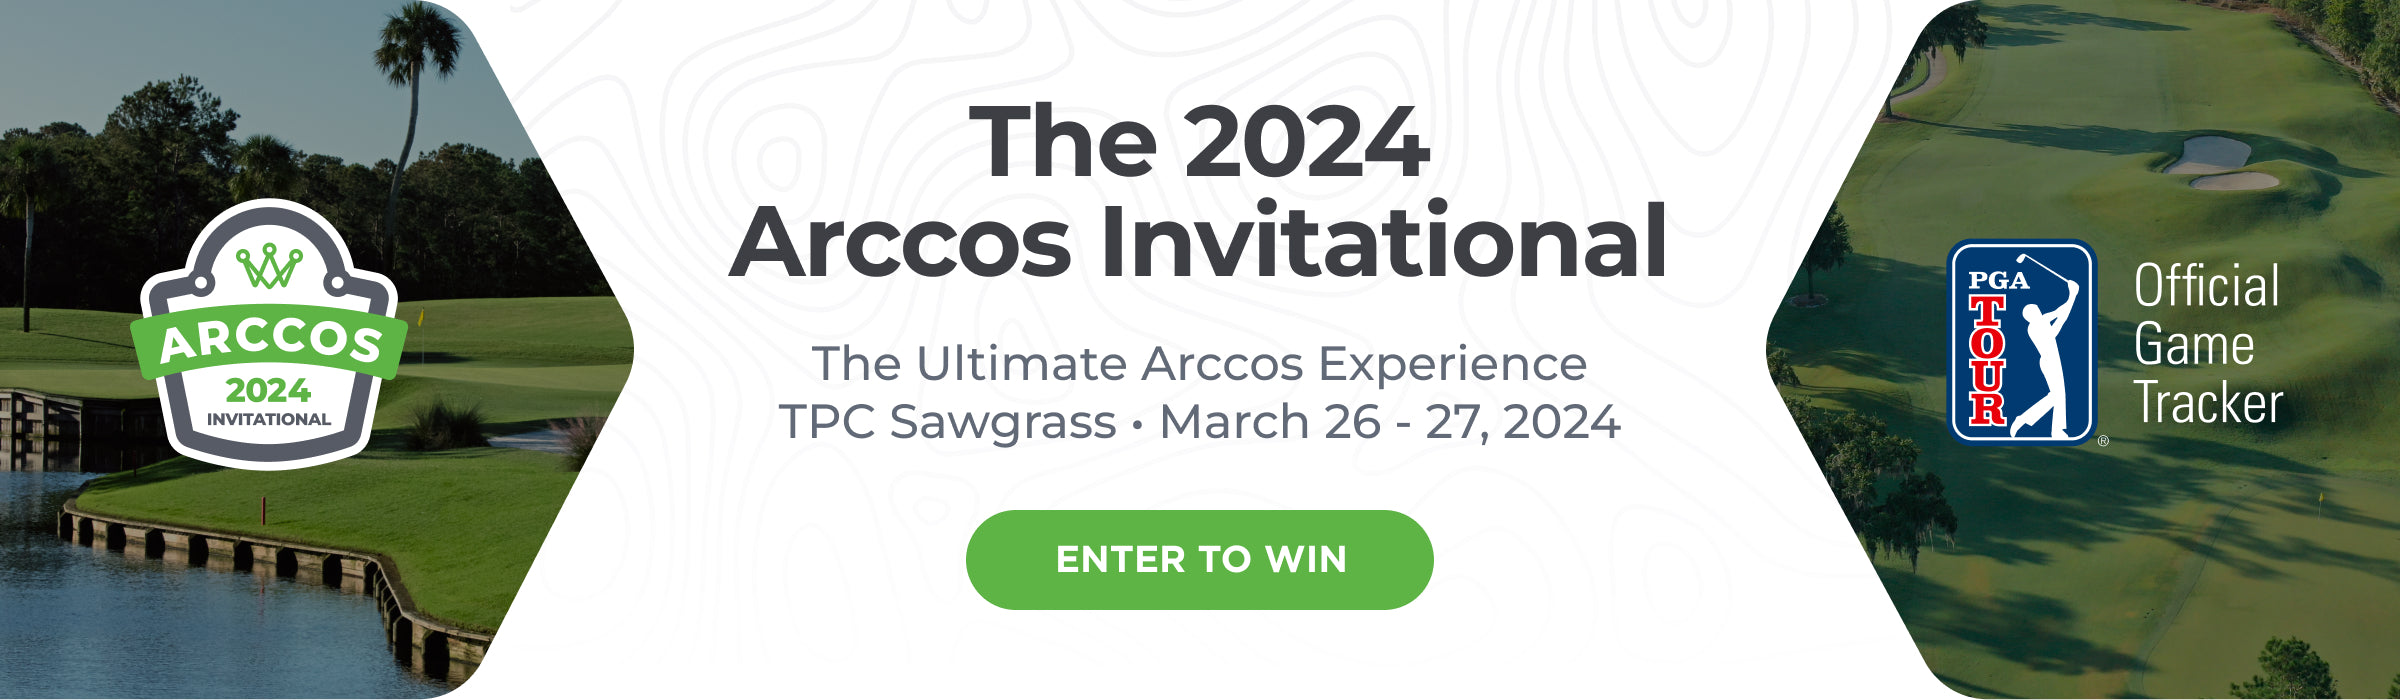 Arccos Invitational